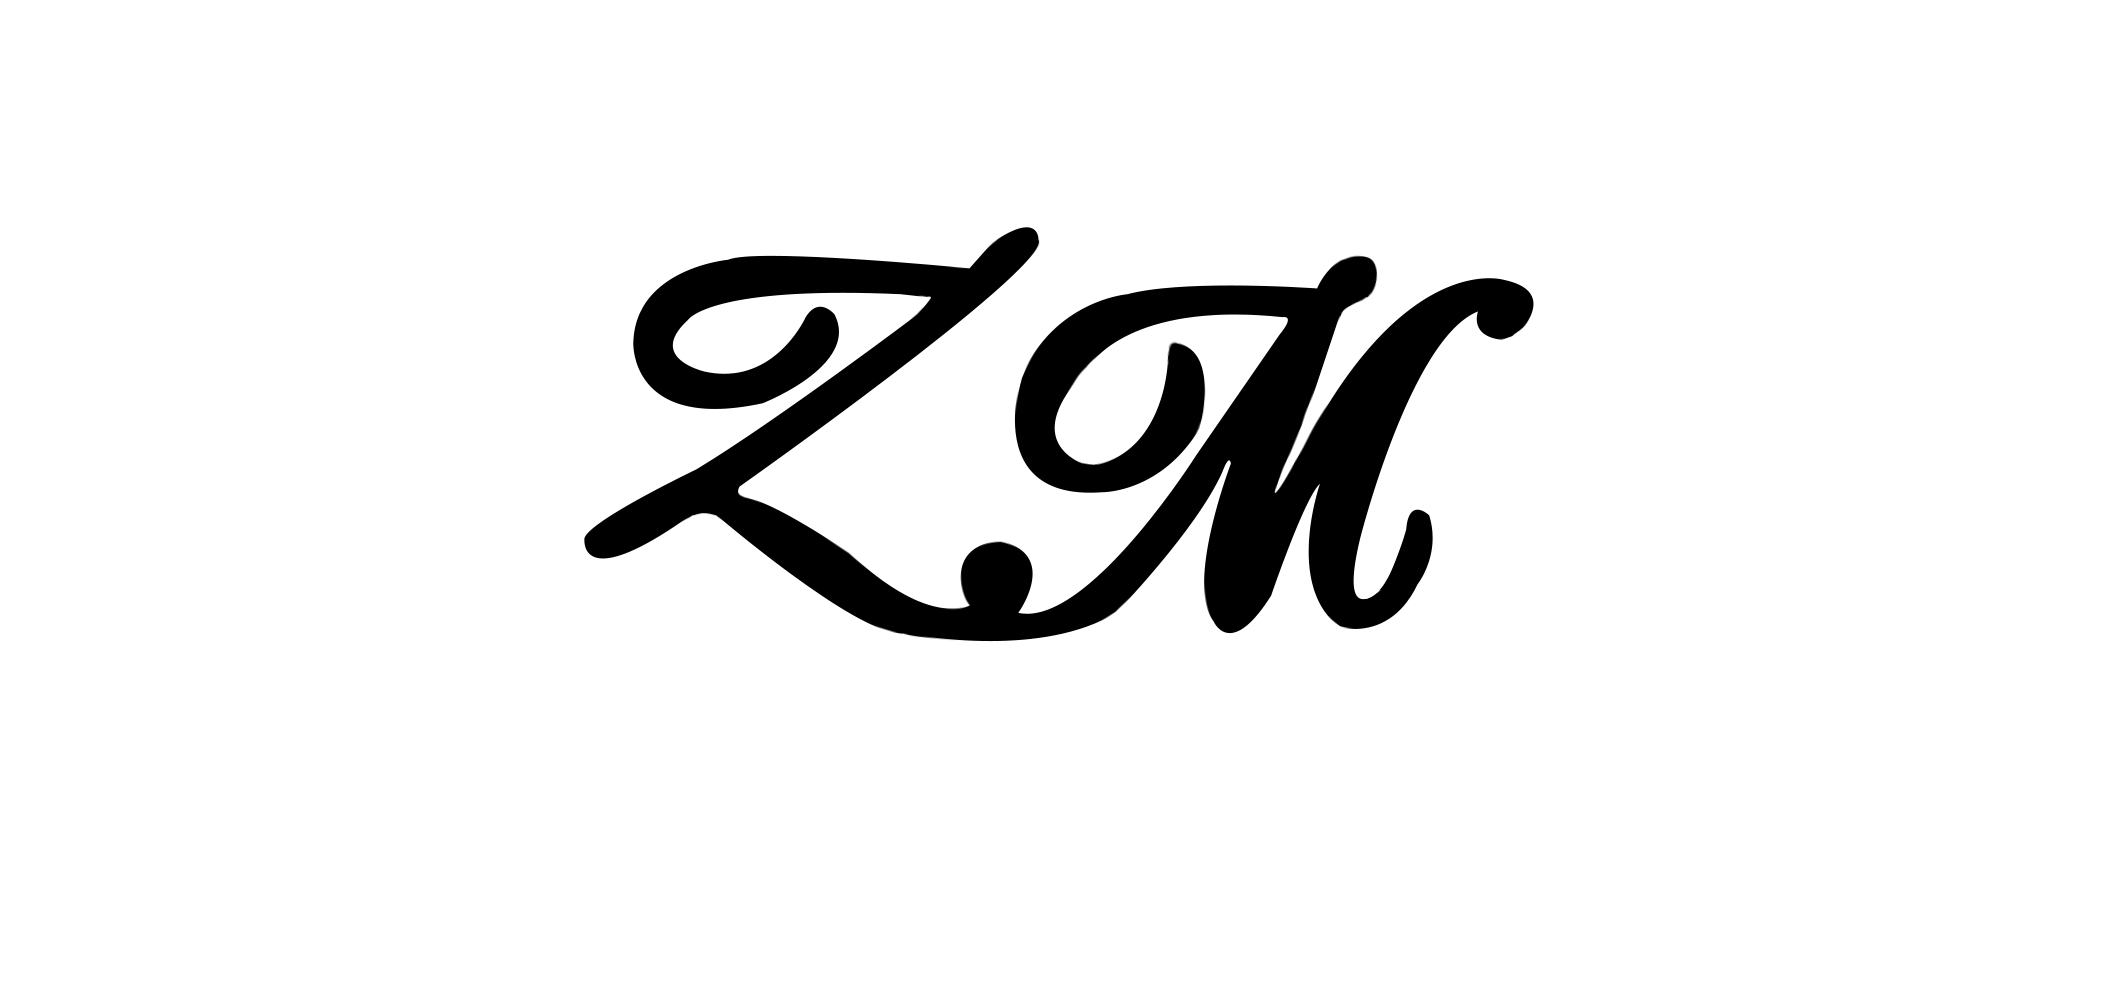 zm是什么牌子_zm品牌怎么样?